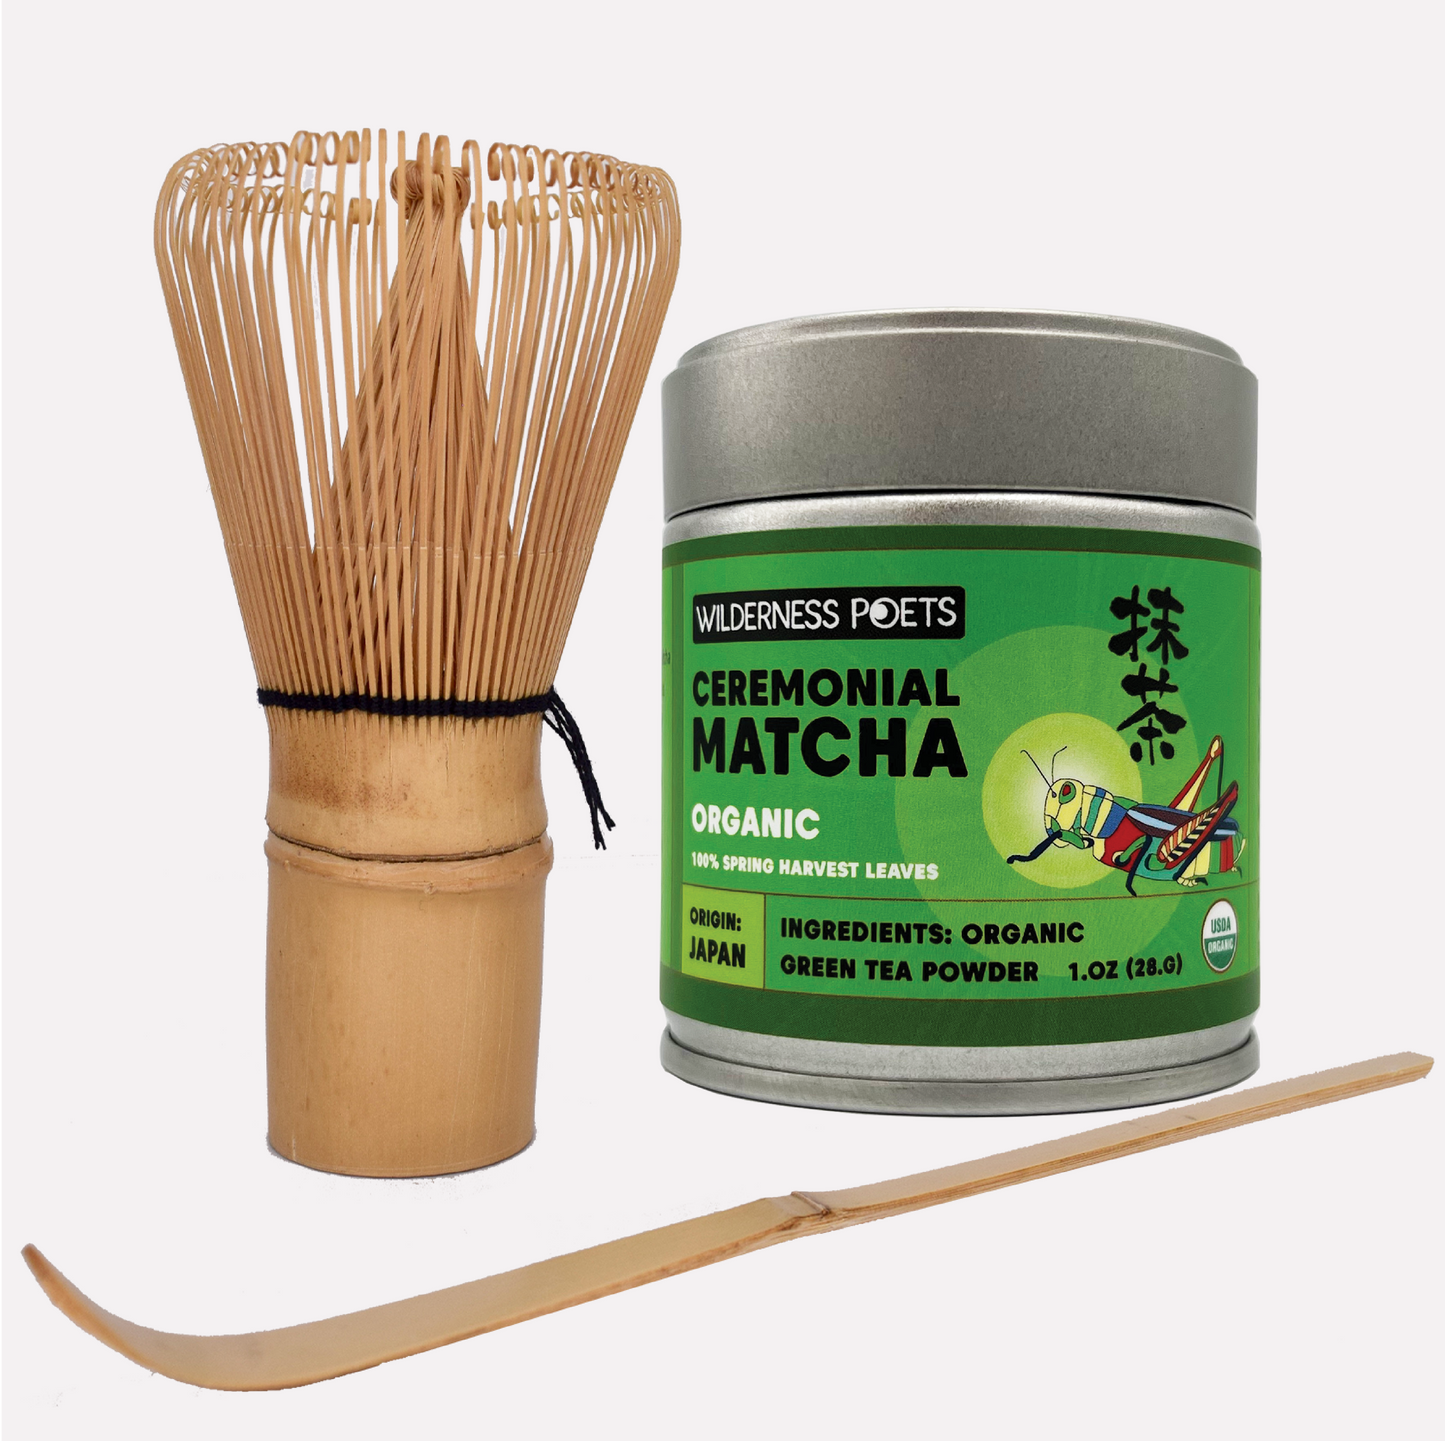 Matcha Green Tea Powder - Ceremonial Grade, Organic